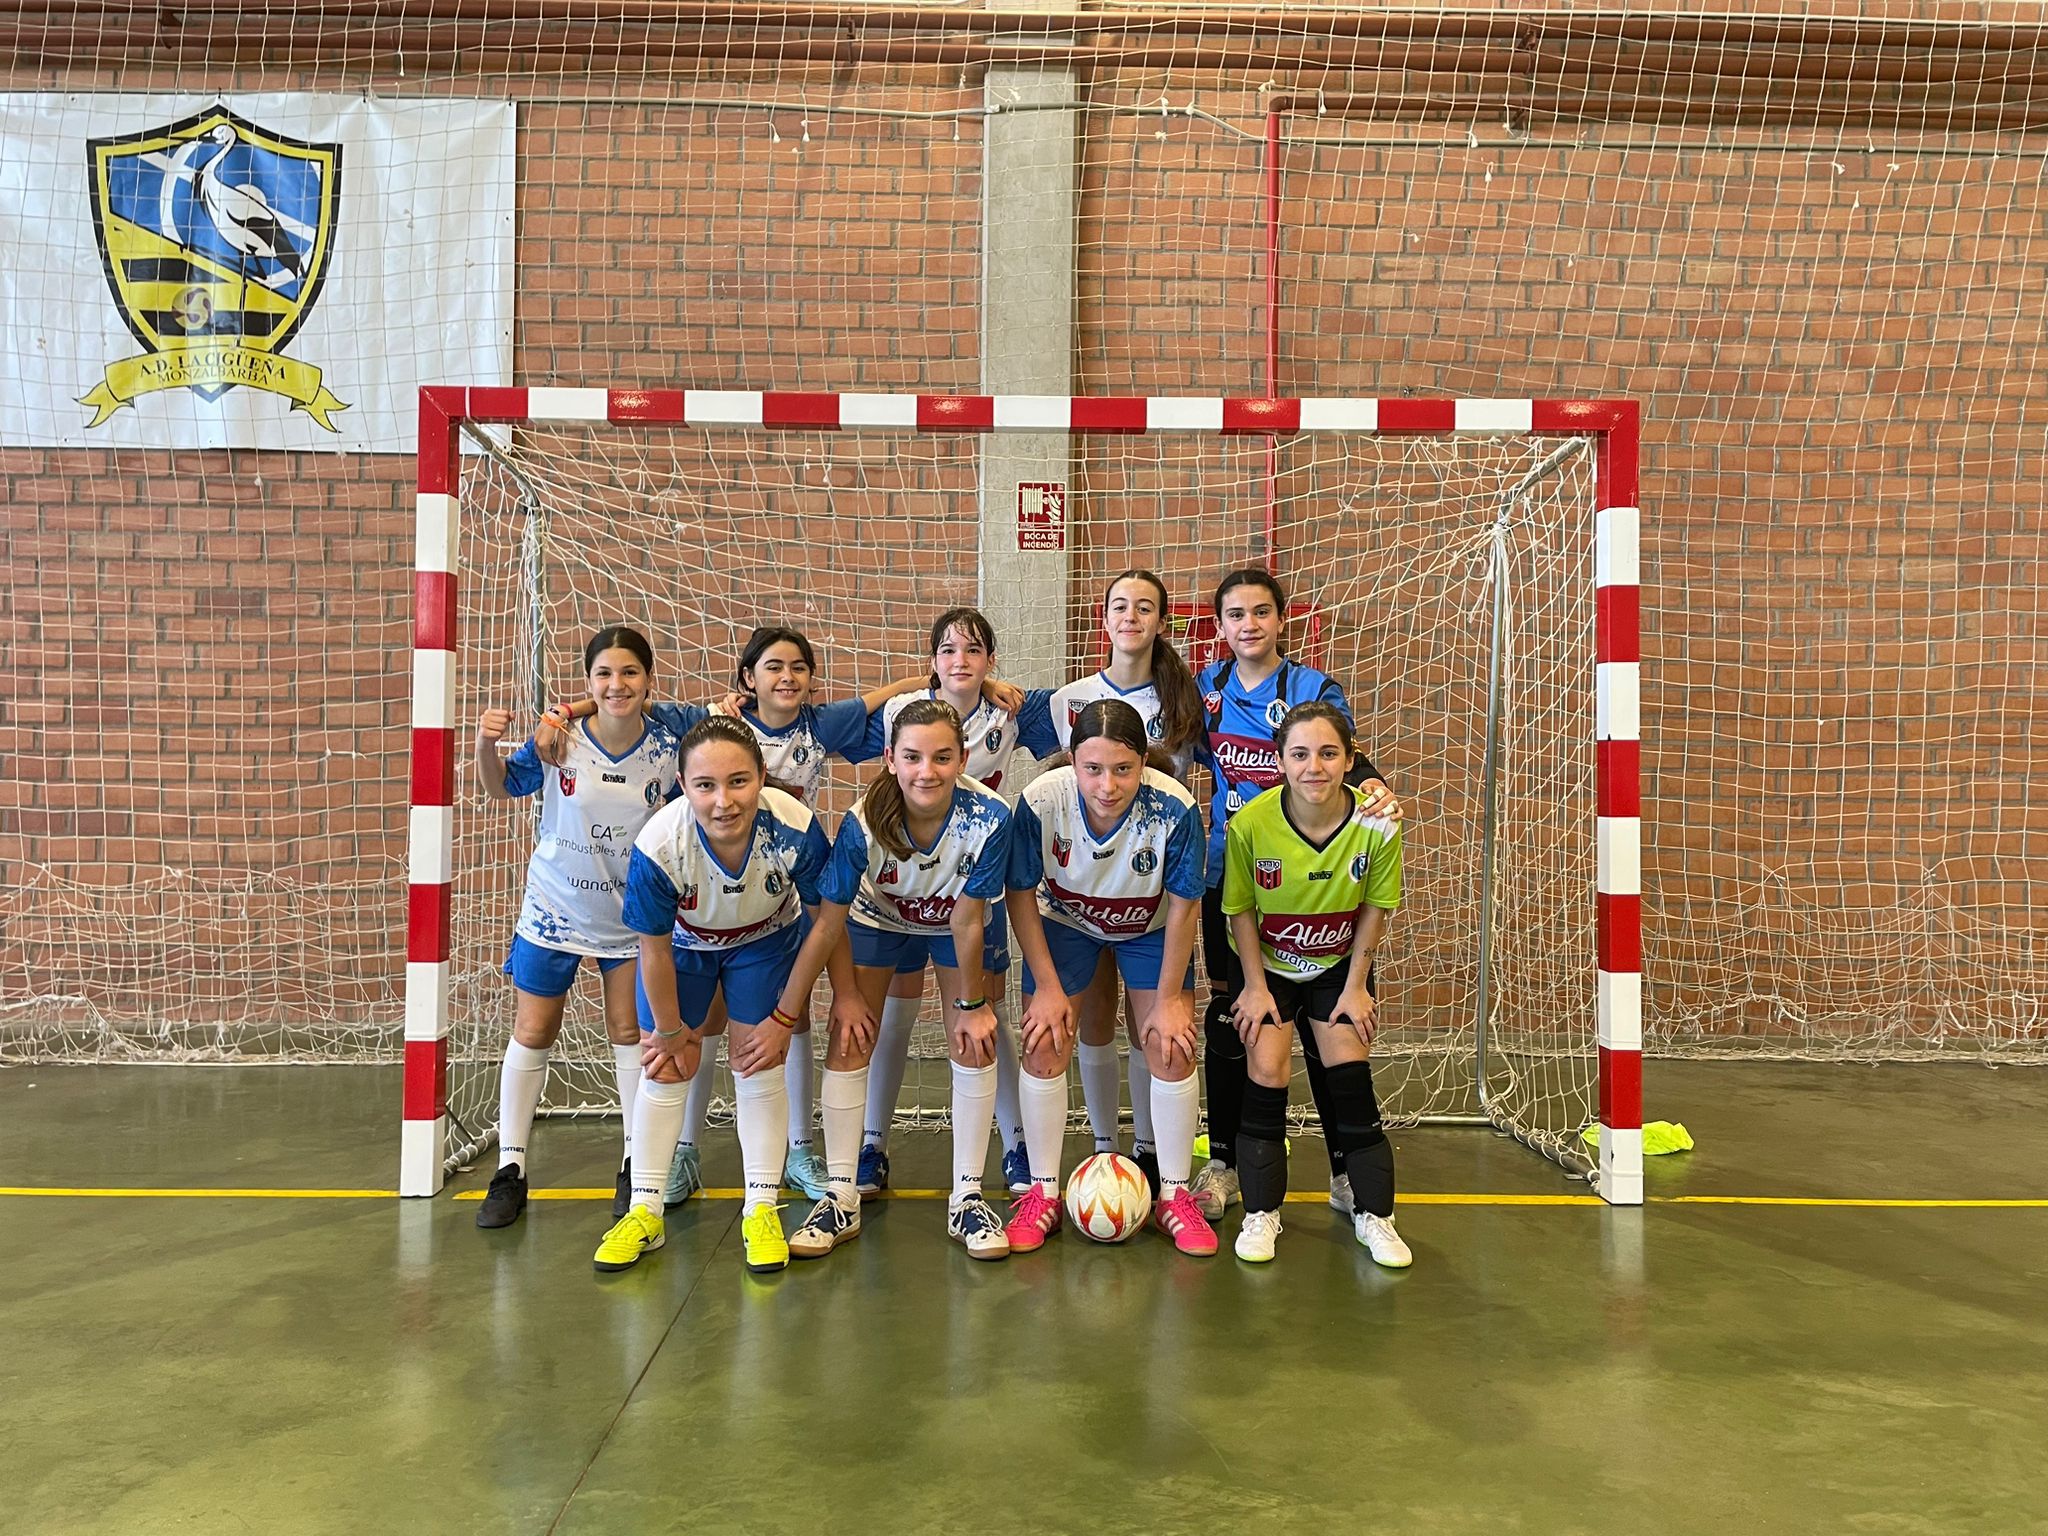 La Cigüeña 0-1 Aldelís InterSala 10 Zaragoza (Infantil femenino) – Jornada 9 – 2º Fase